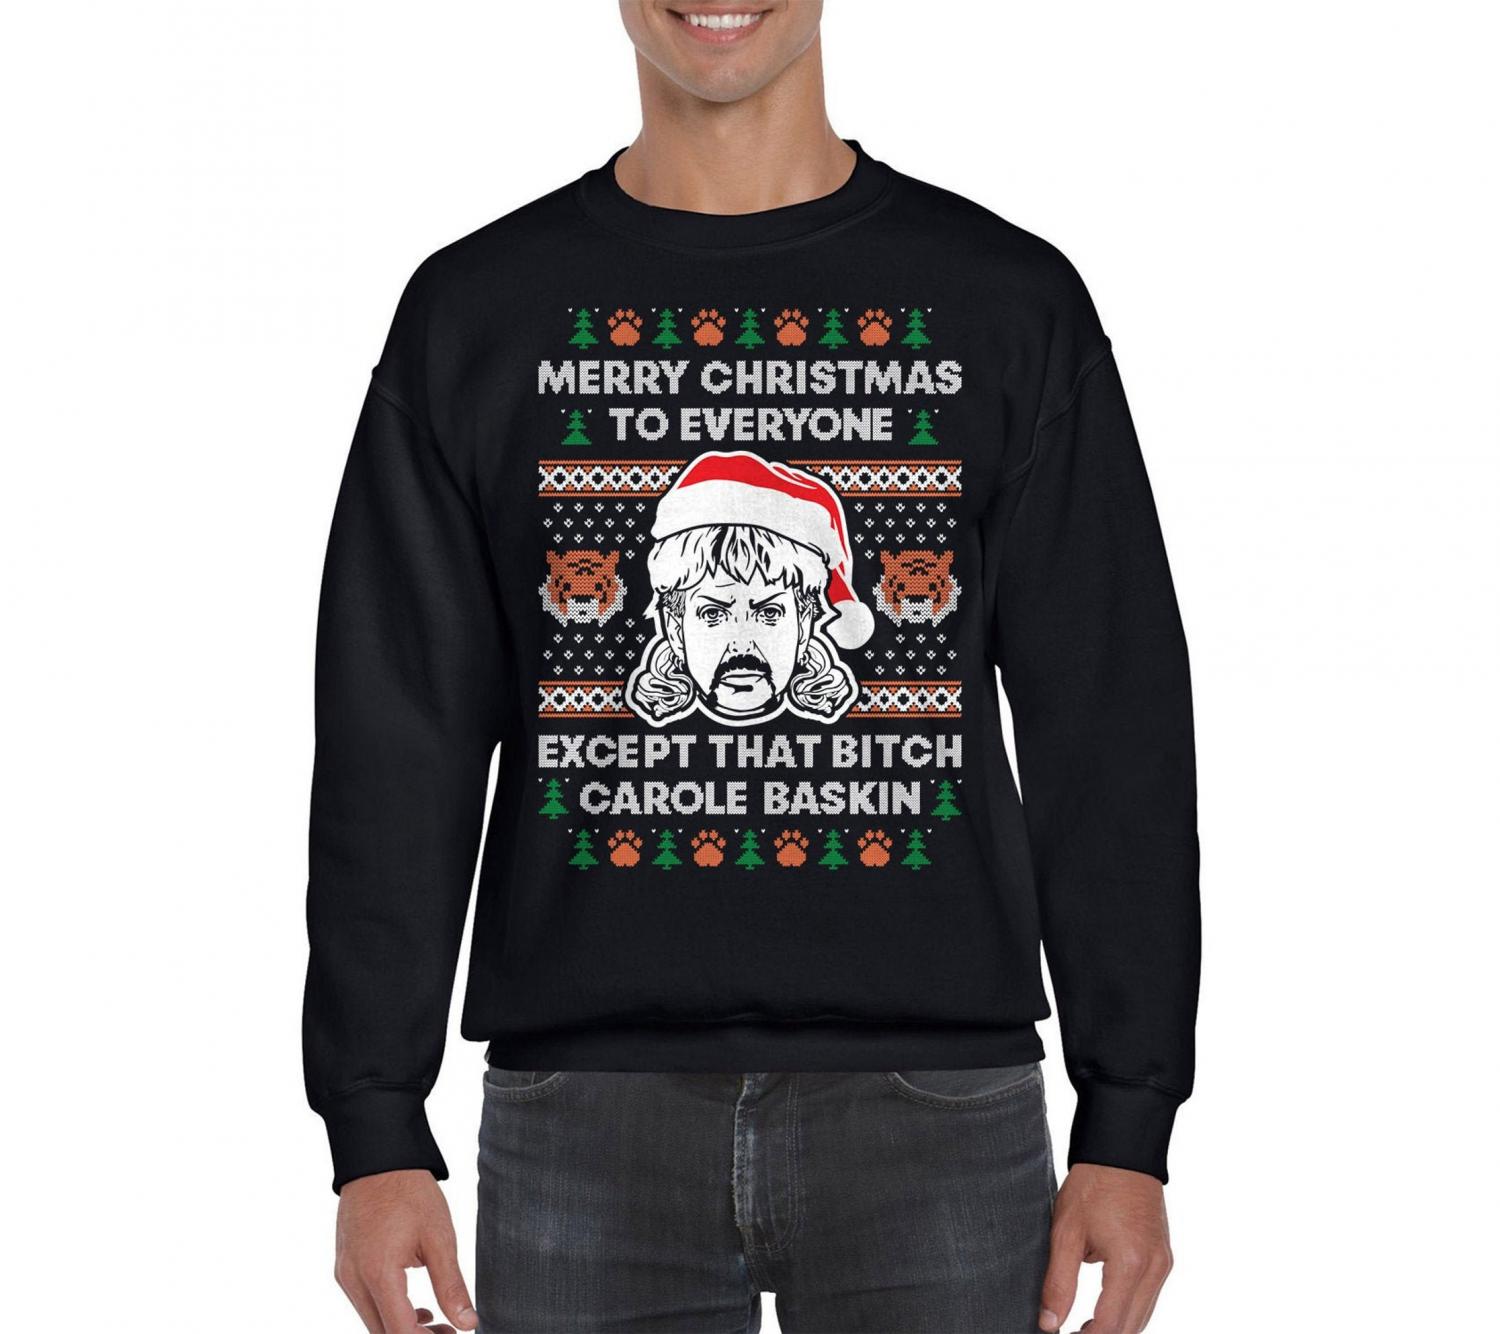 Merry Christmas To Everyone Except Carol Baskin - Joe Exotic Christmas Sweater